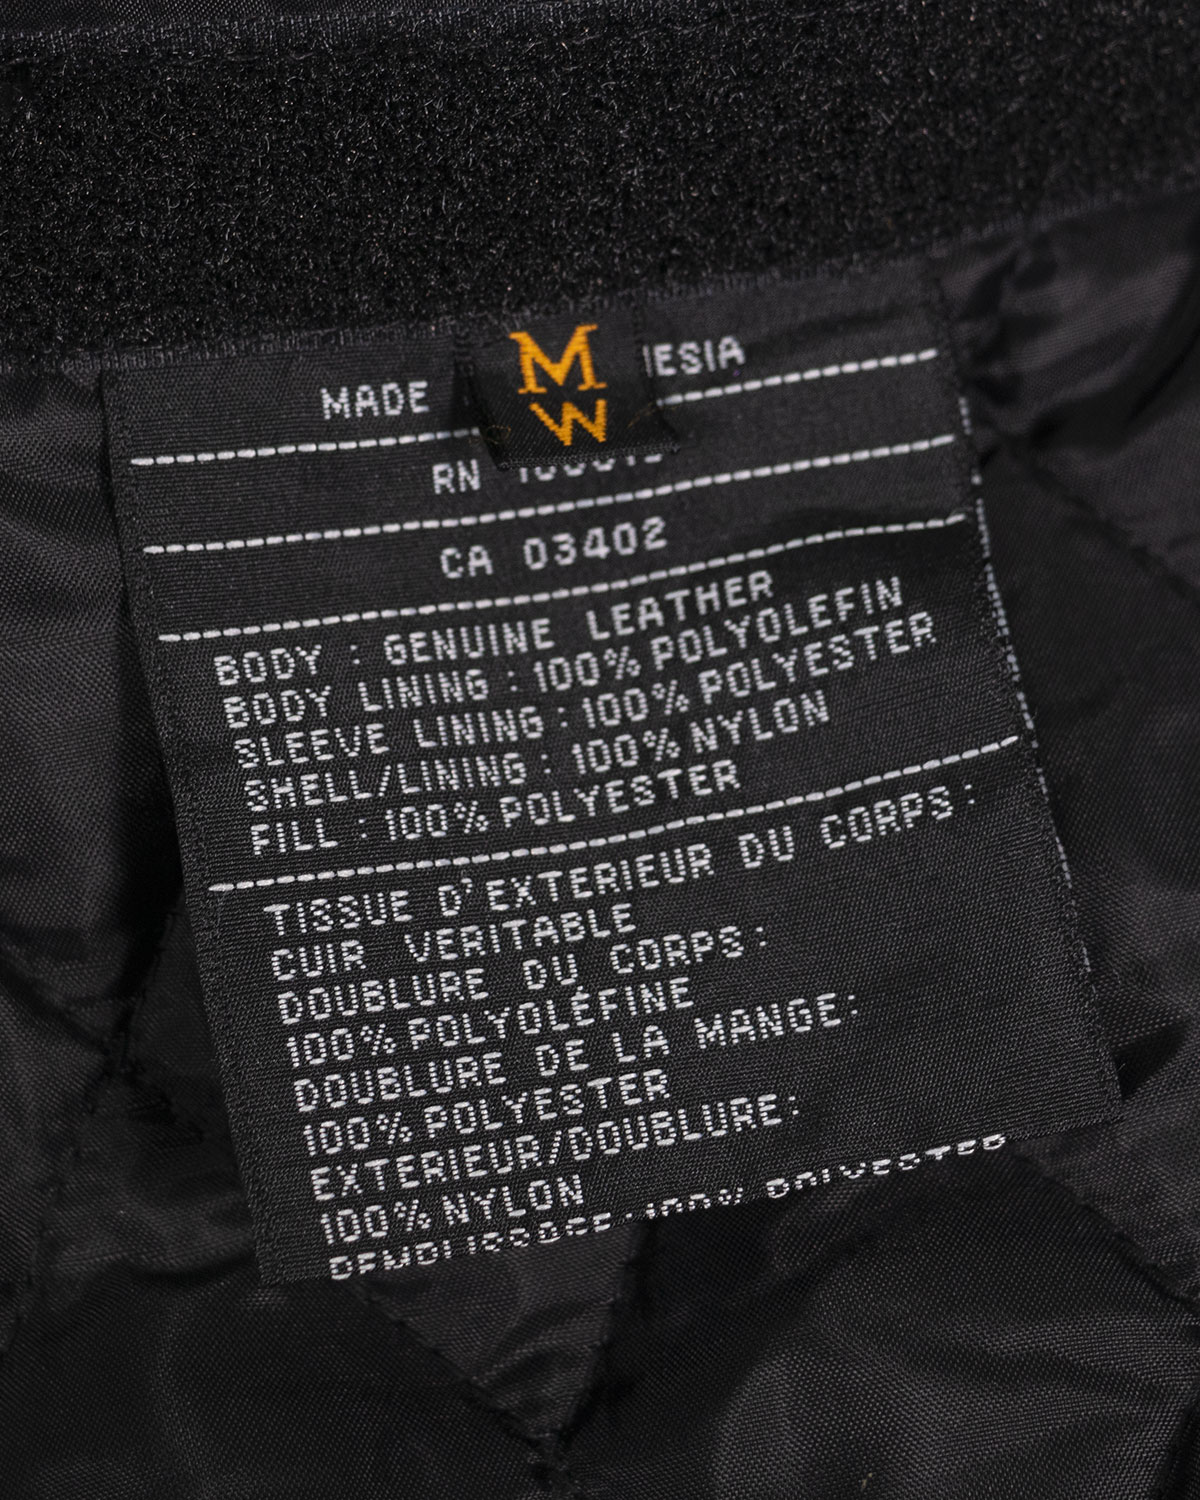 Harley Davidson - 100% Leather jacket